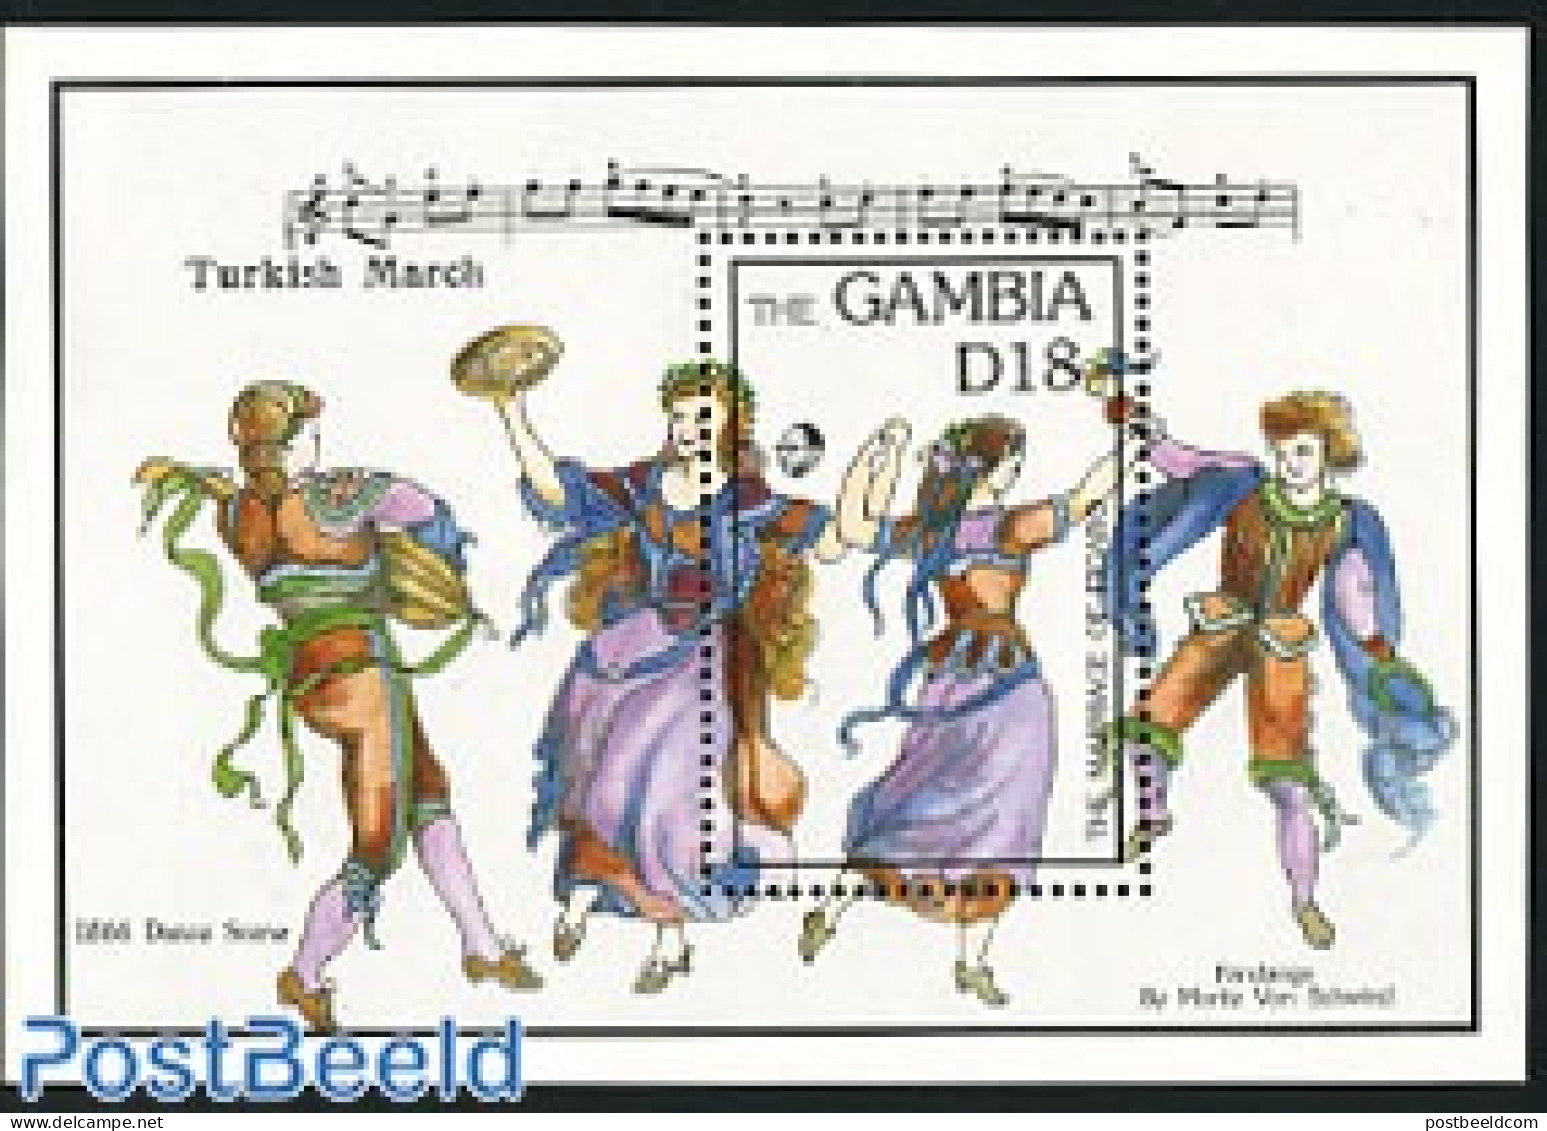 Gambia 1993 W.A. Mozart S/s, Mint NH, Performance Art - Amadeus Mozart - Music - Musique